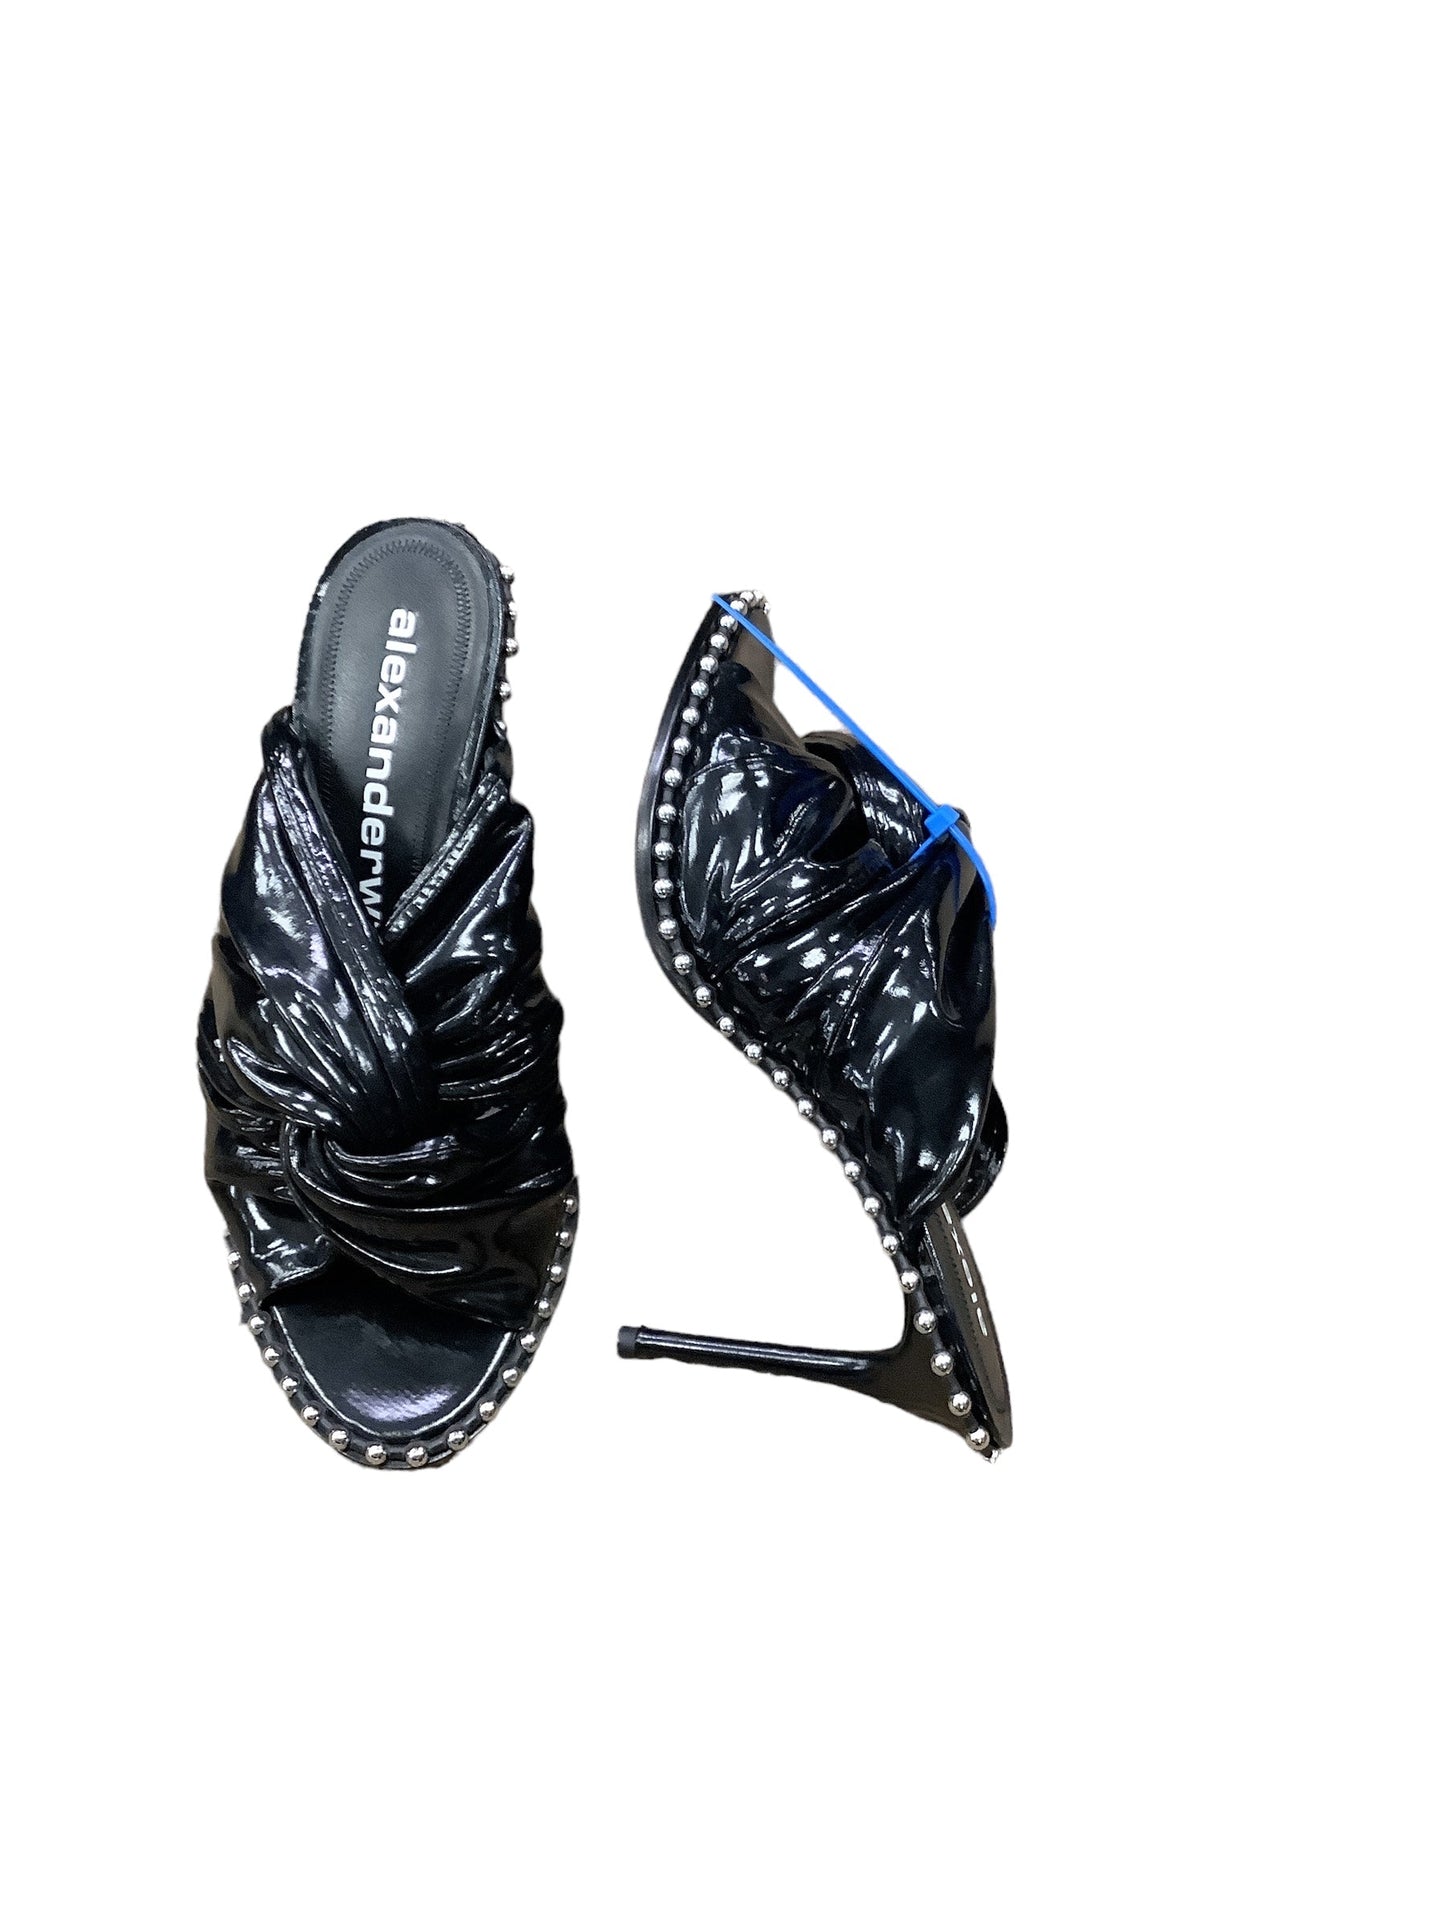 Black & Silver Sandals Luxury Designer Alexander Wang, Size 10